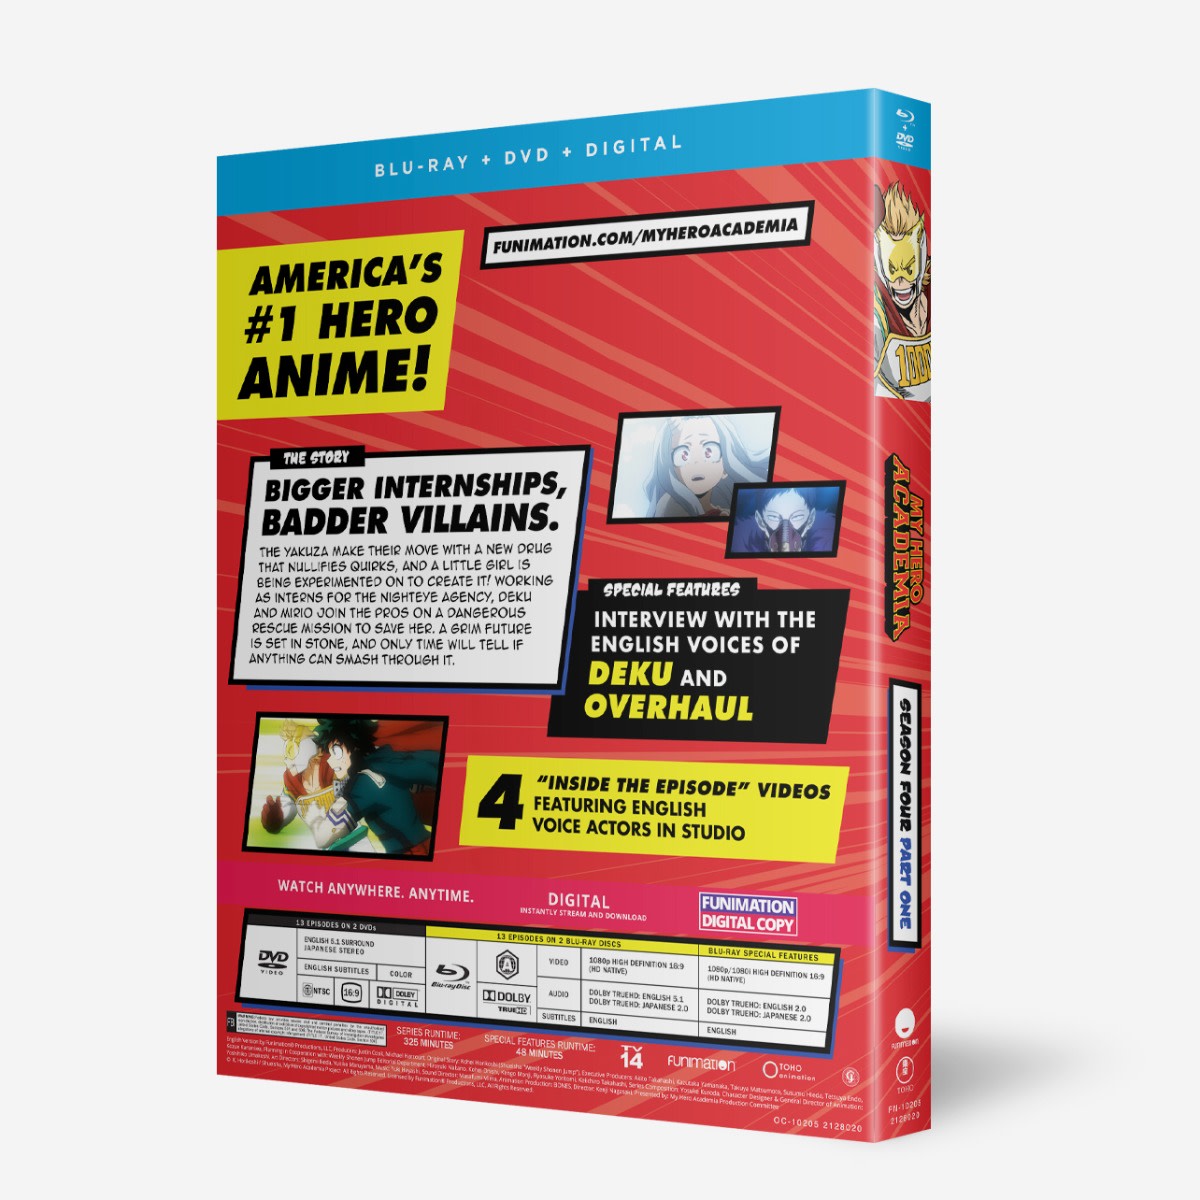 My Hero Academia: Season Four: Part One Blu-ray (Blu-ray + DVD + Digital HD)